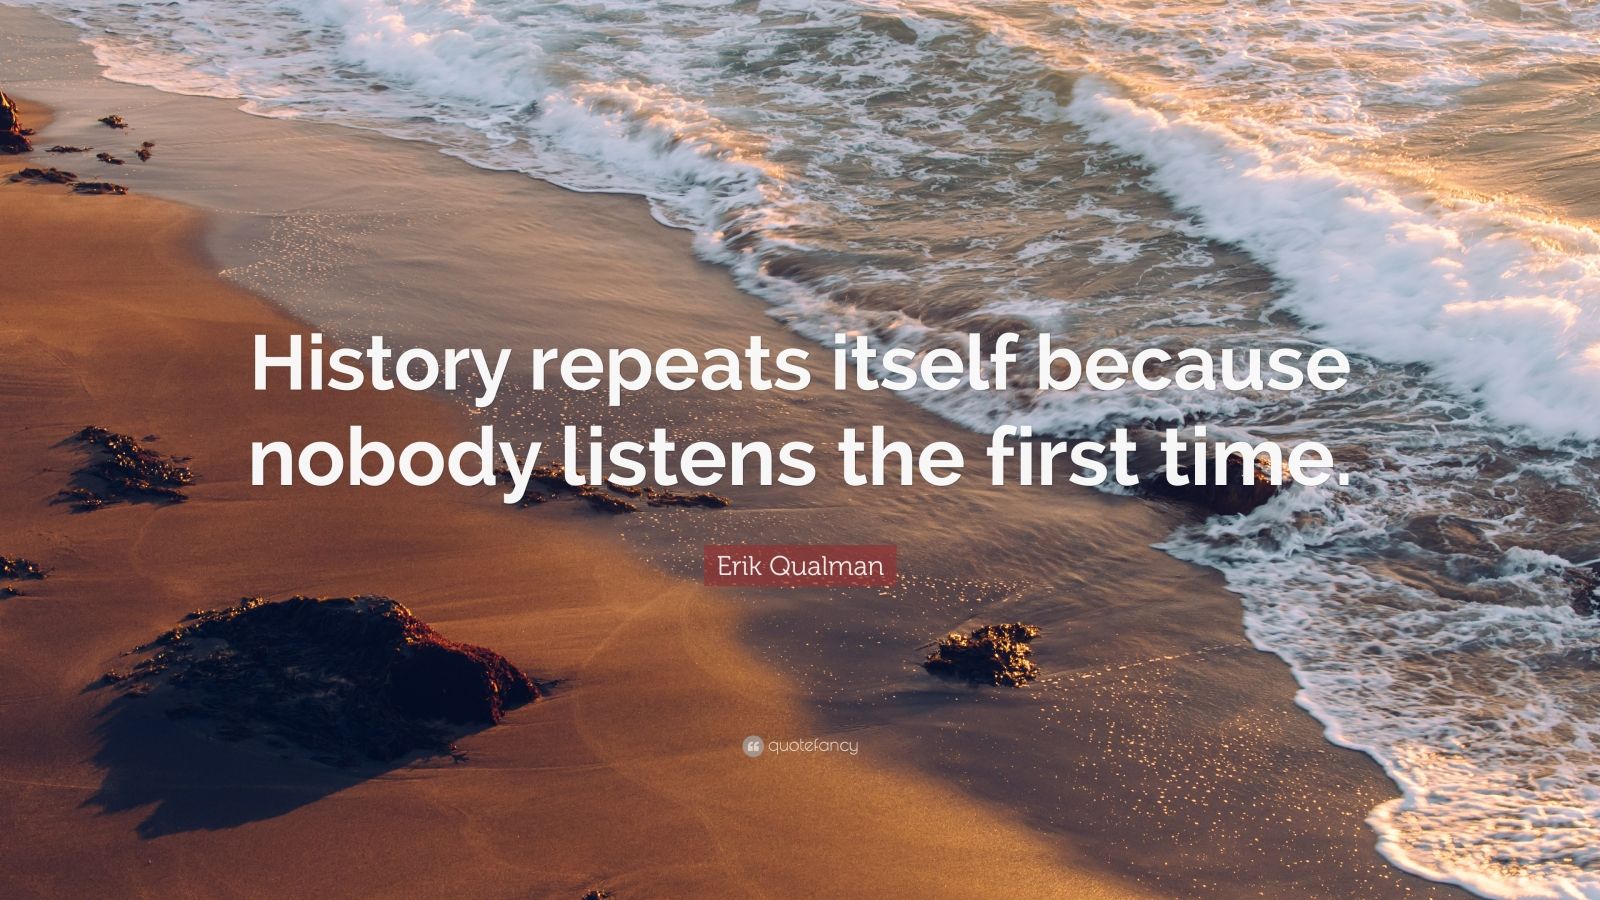 Erik Qualman Quote: "History repeats itself because nobody ...